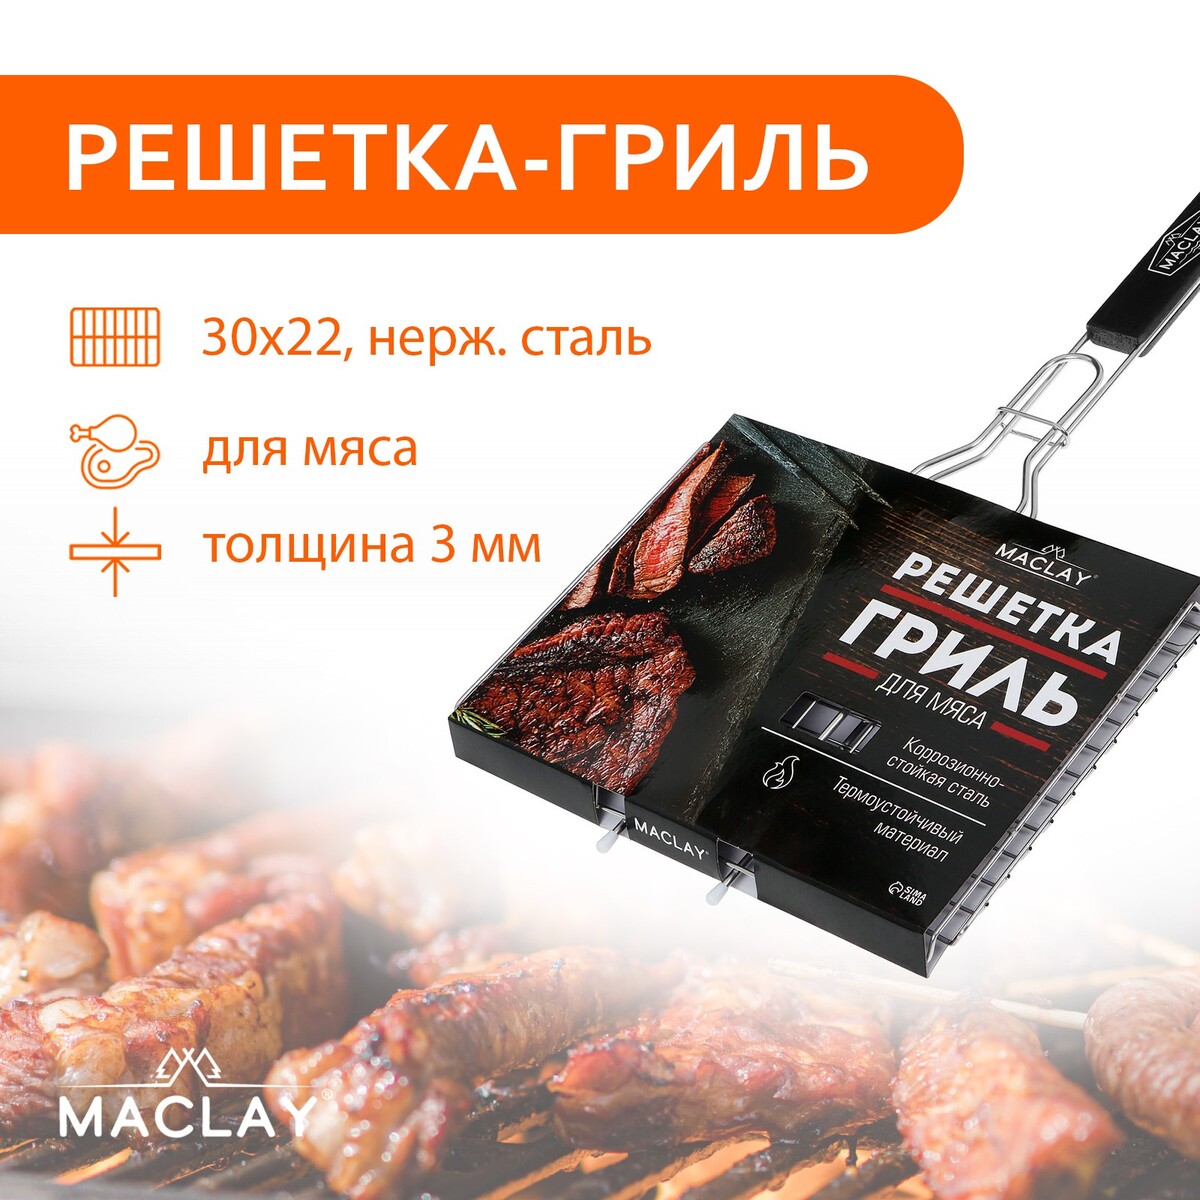 Решетка гриль maclay premium, 50х30х22 см, для мяса, нержавеющая сталь решетка гриль maclay 50х30х22 см нержавеющая сталь